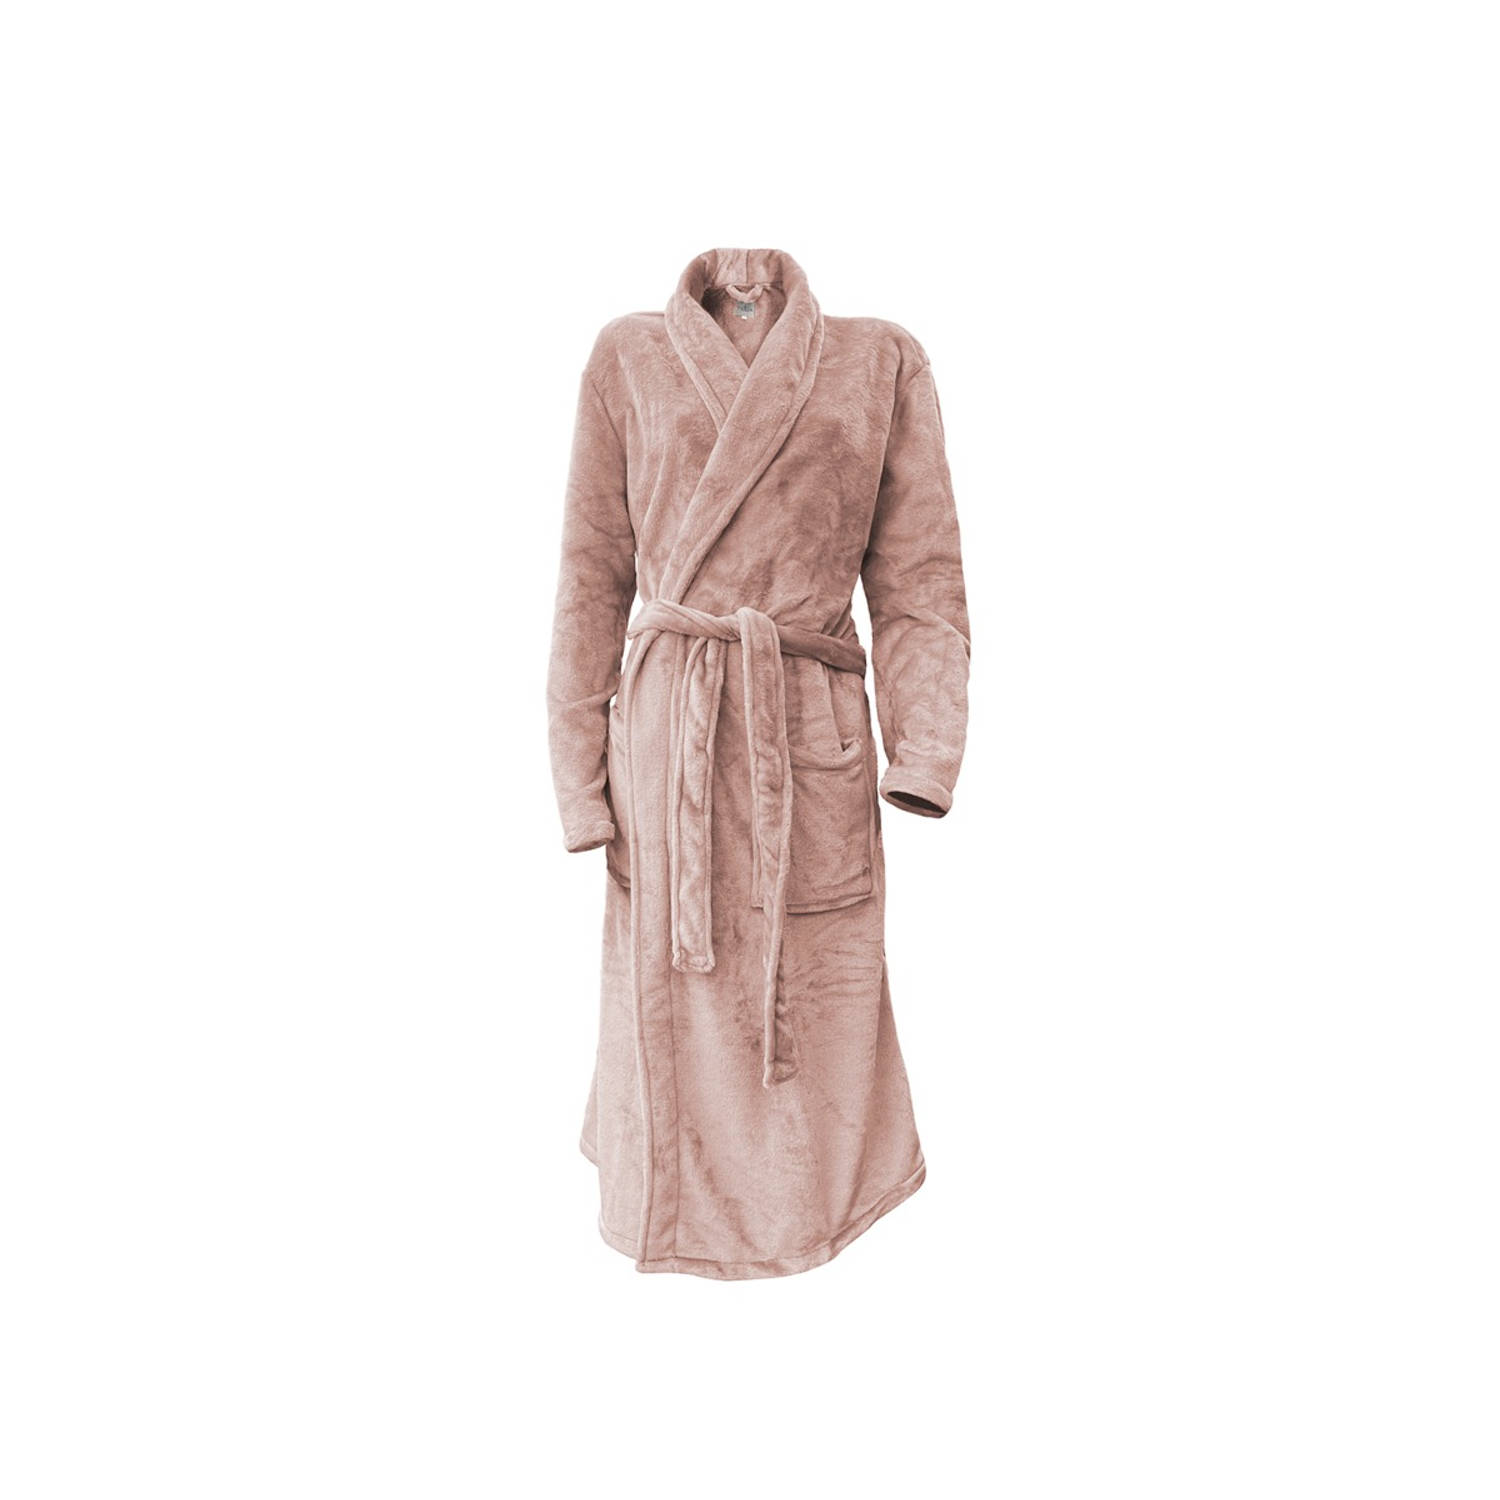 LINNICK Flanel Fleece Uni Badjas - Light Pink - L - Badjas Dames - Badjas Heren